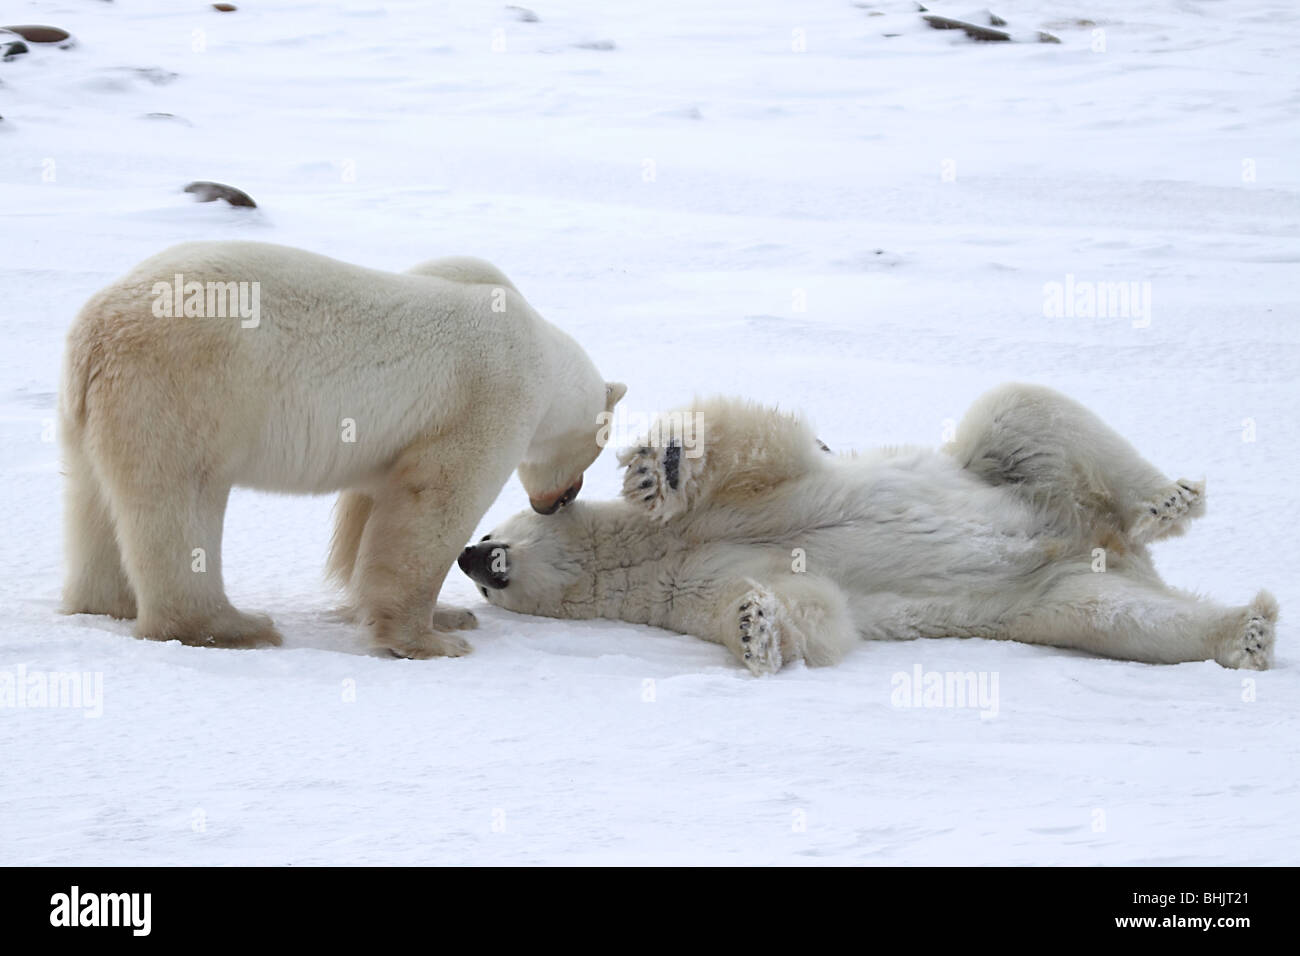 Polar Bears, Males, Sparring Stock Photo